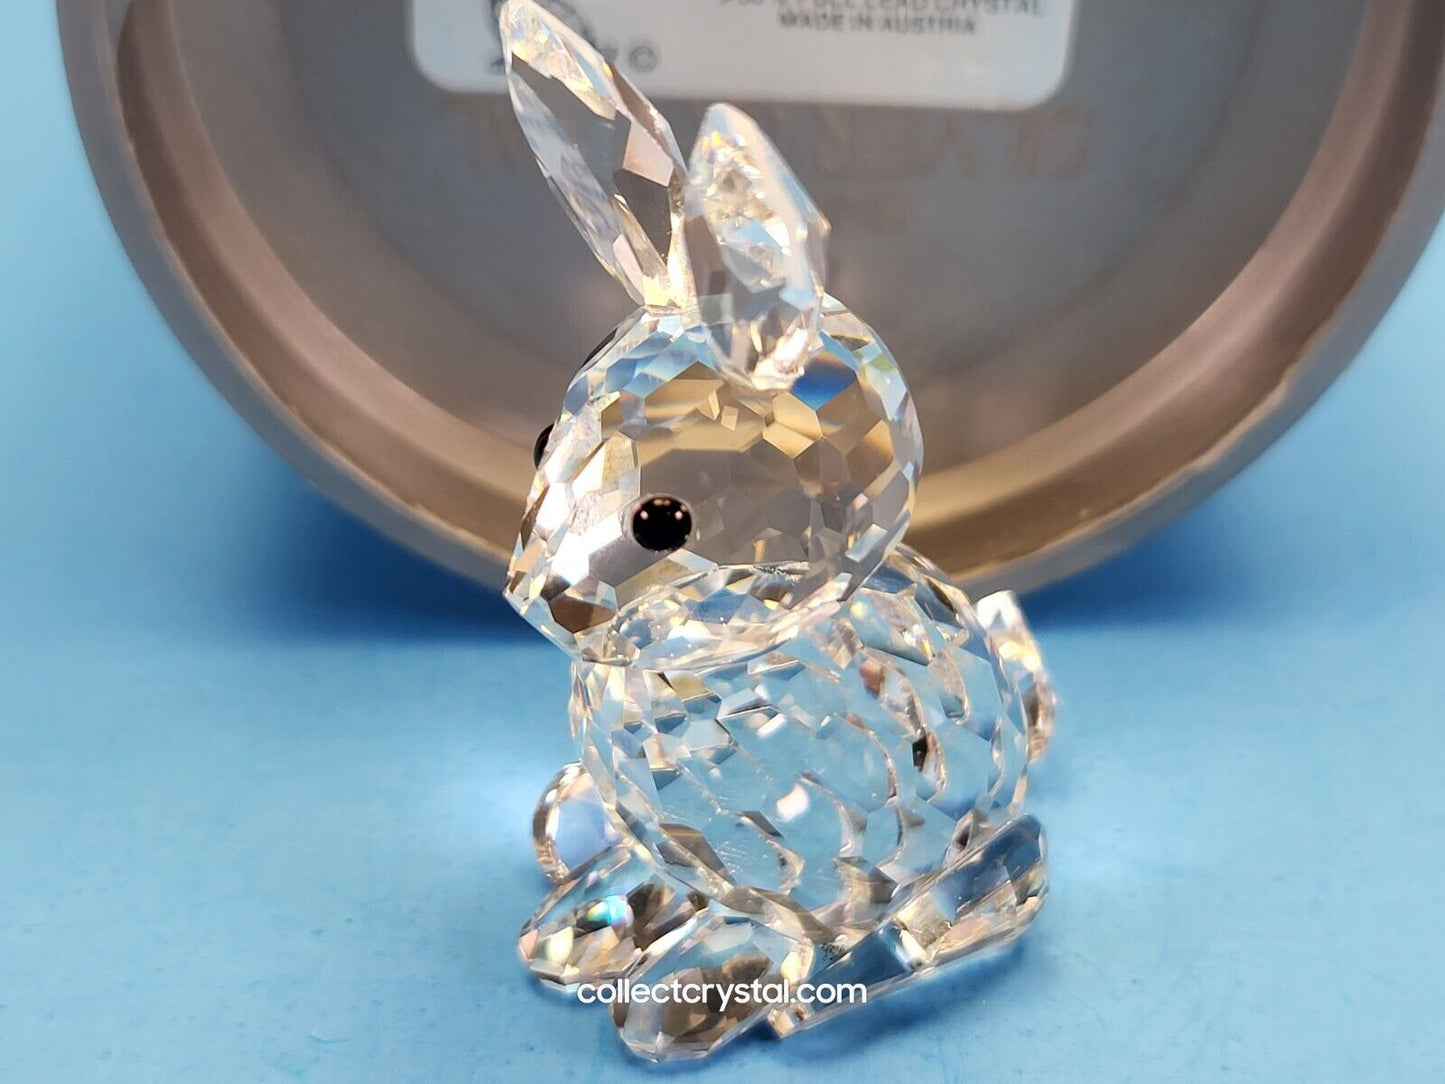 Bunny Rabbit Mother Figurine Sitting Ears Up 014850